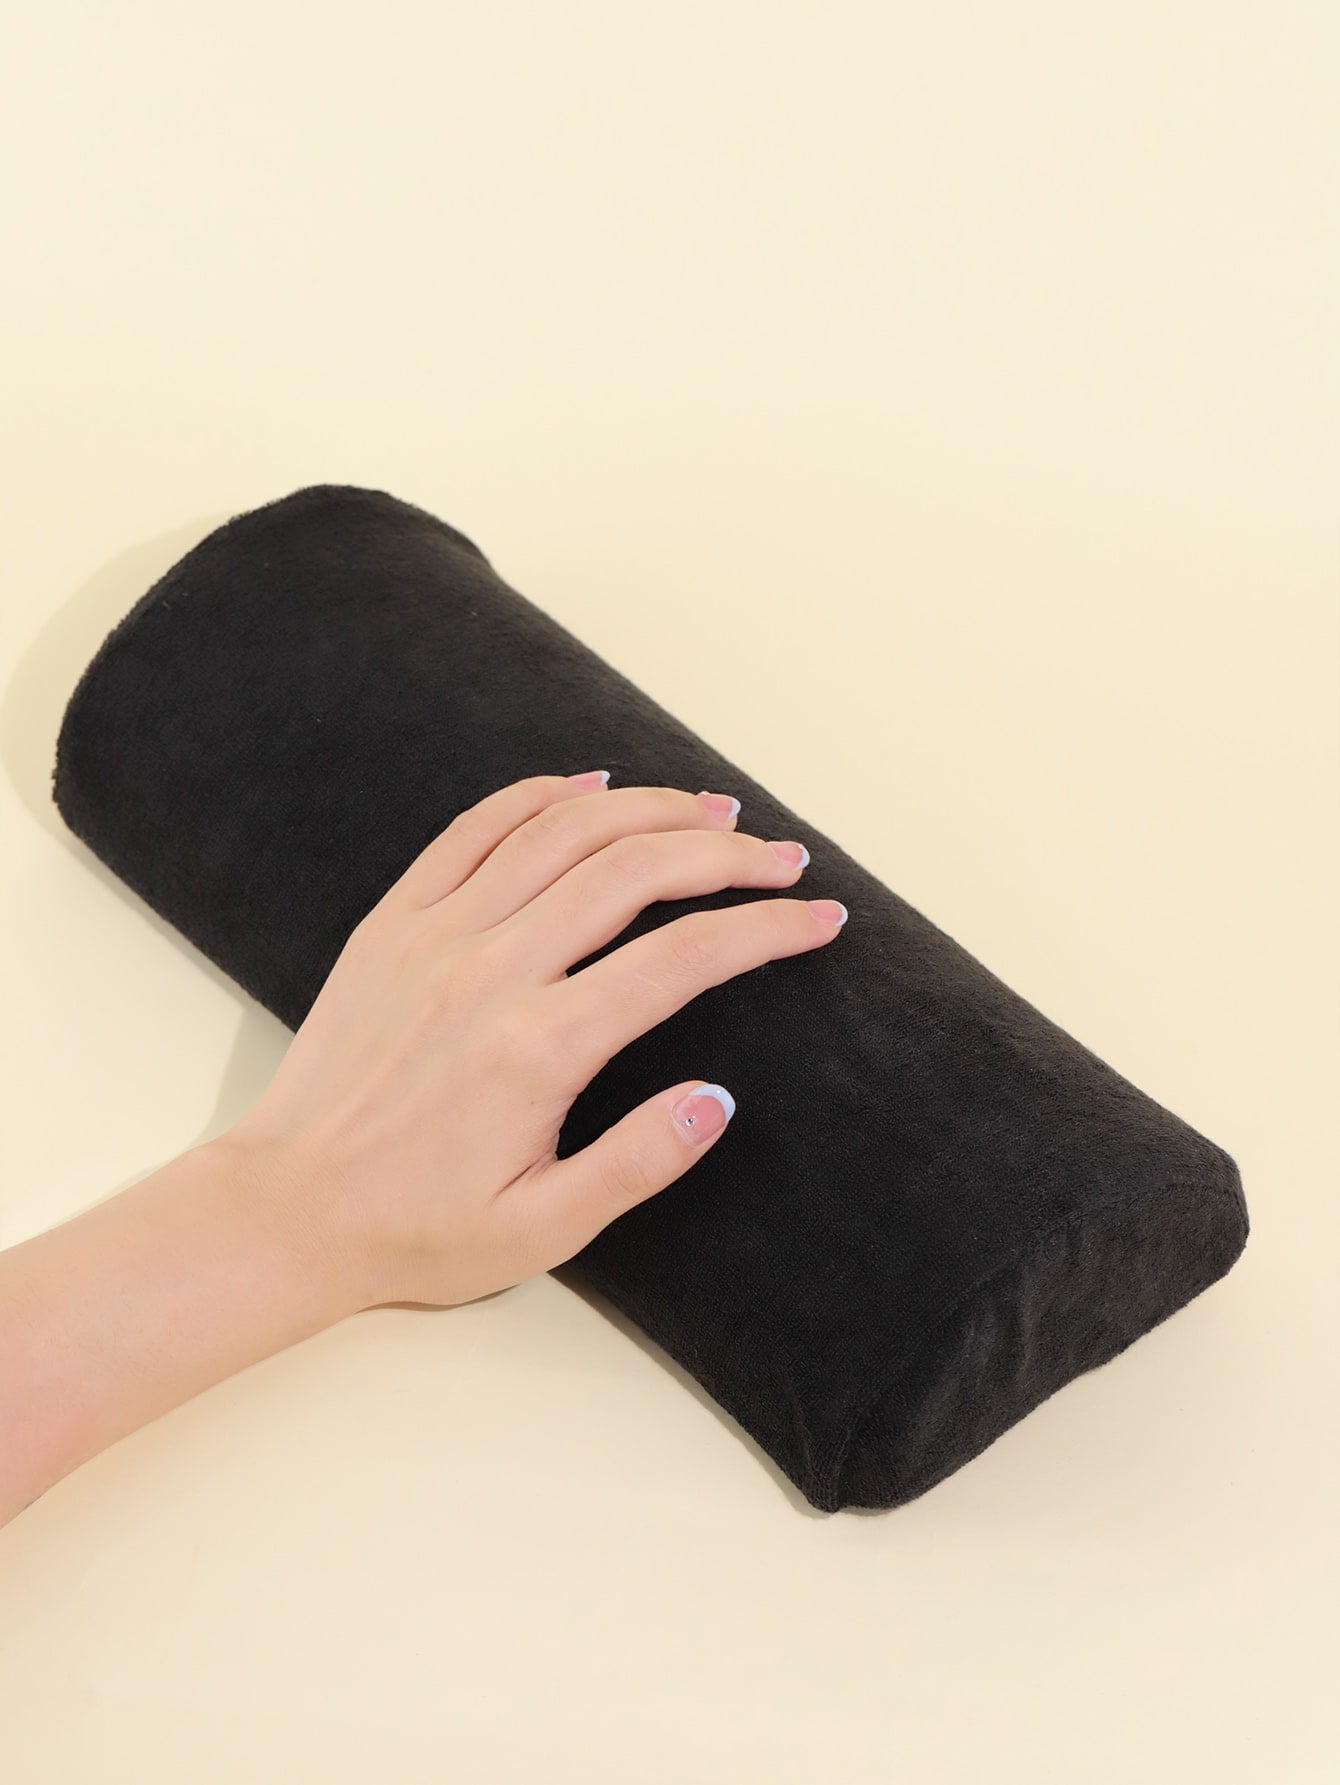 1pc Hand Cushion, Nail Art Soft Sponge Pillow - Nail Art Table Mat Holder Pad Salon Hand Rest Cushion, Detachable Washable Arm Rest Holder, Manicure Nail Art Accessories Tool, GelPolish USA